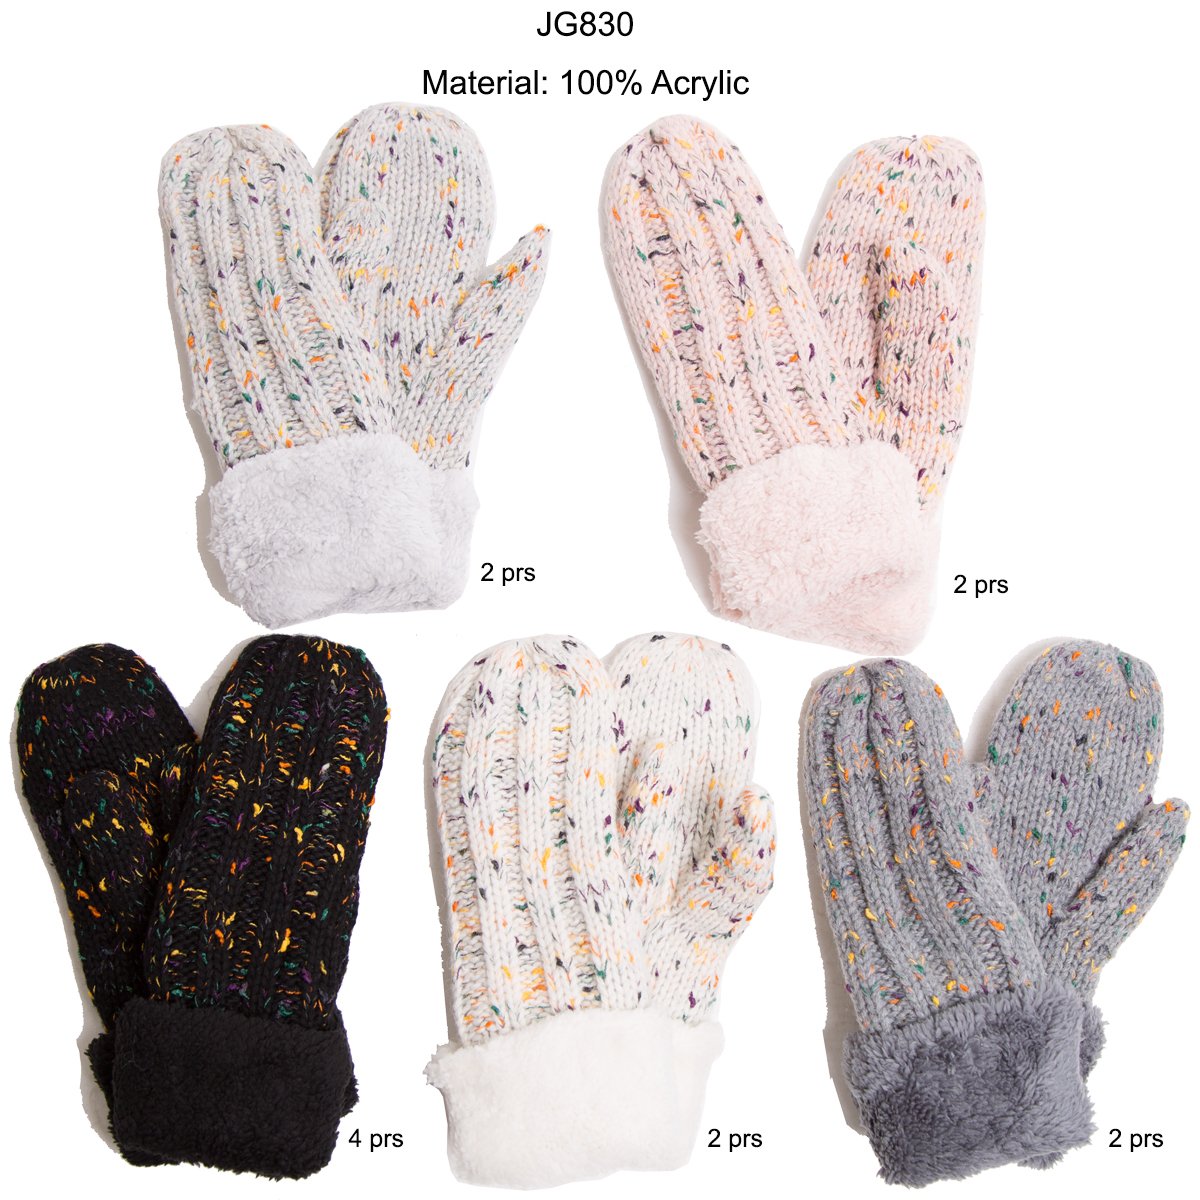 Speckled Knitted Mittens W/ Fleece Cuffs - 12Pc Set